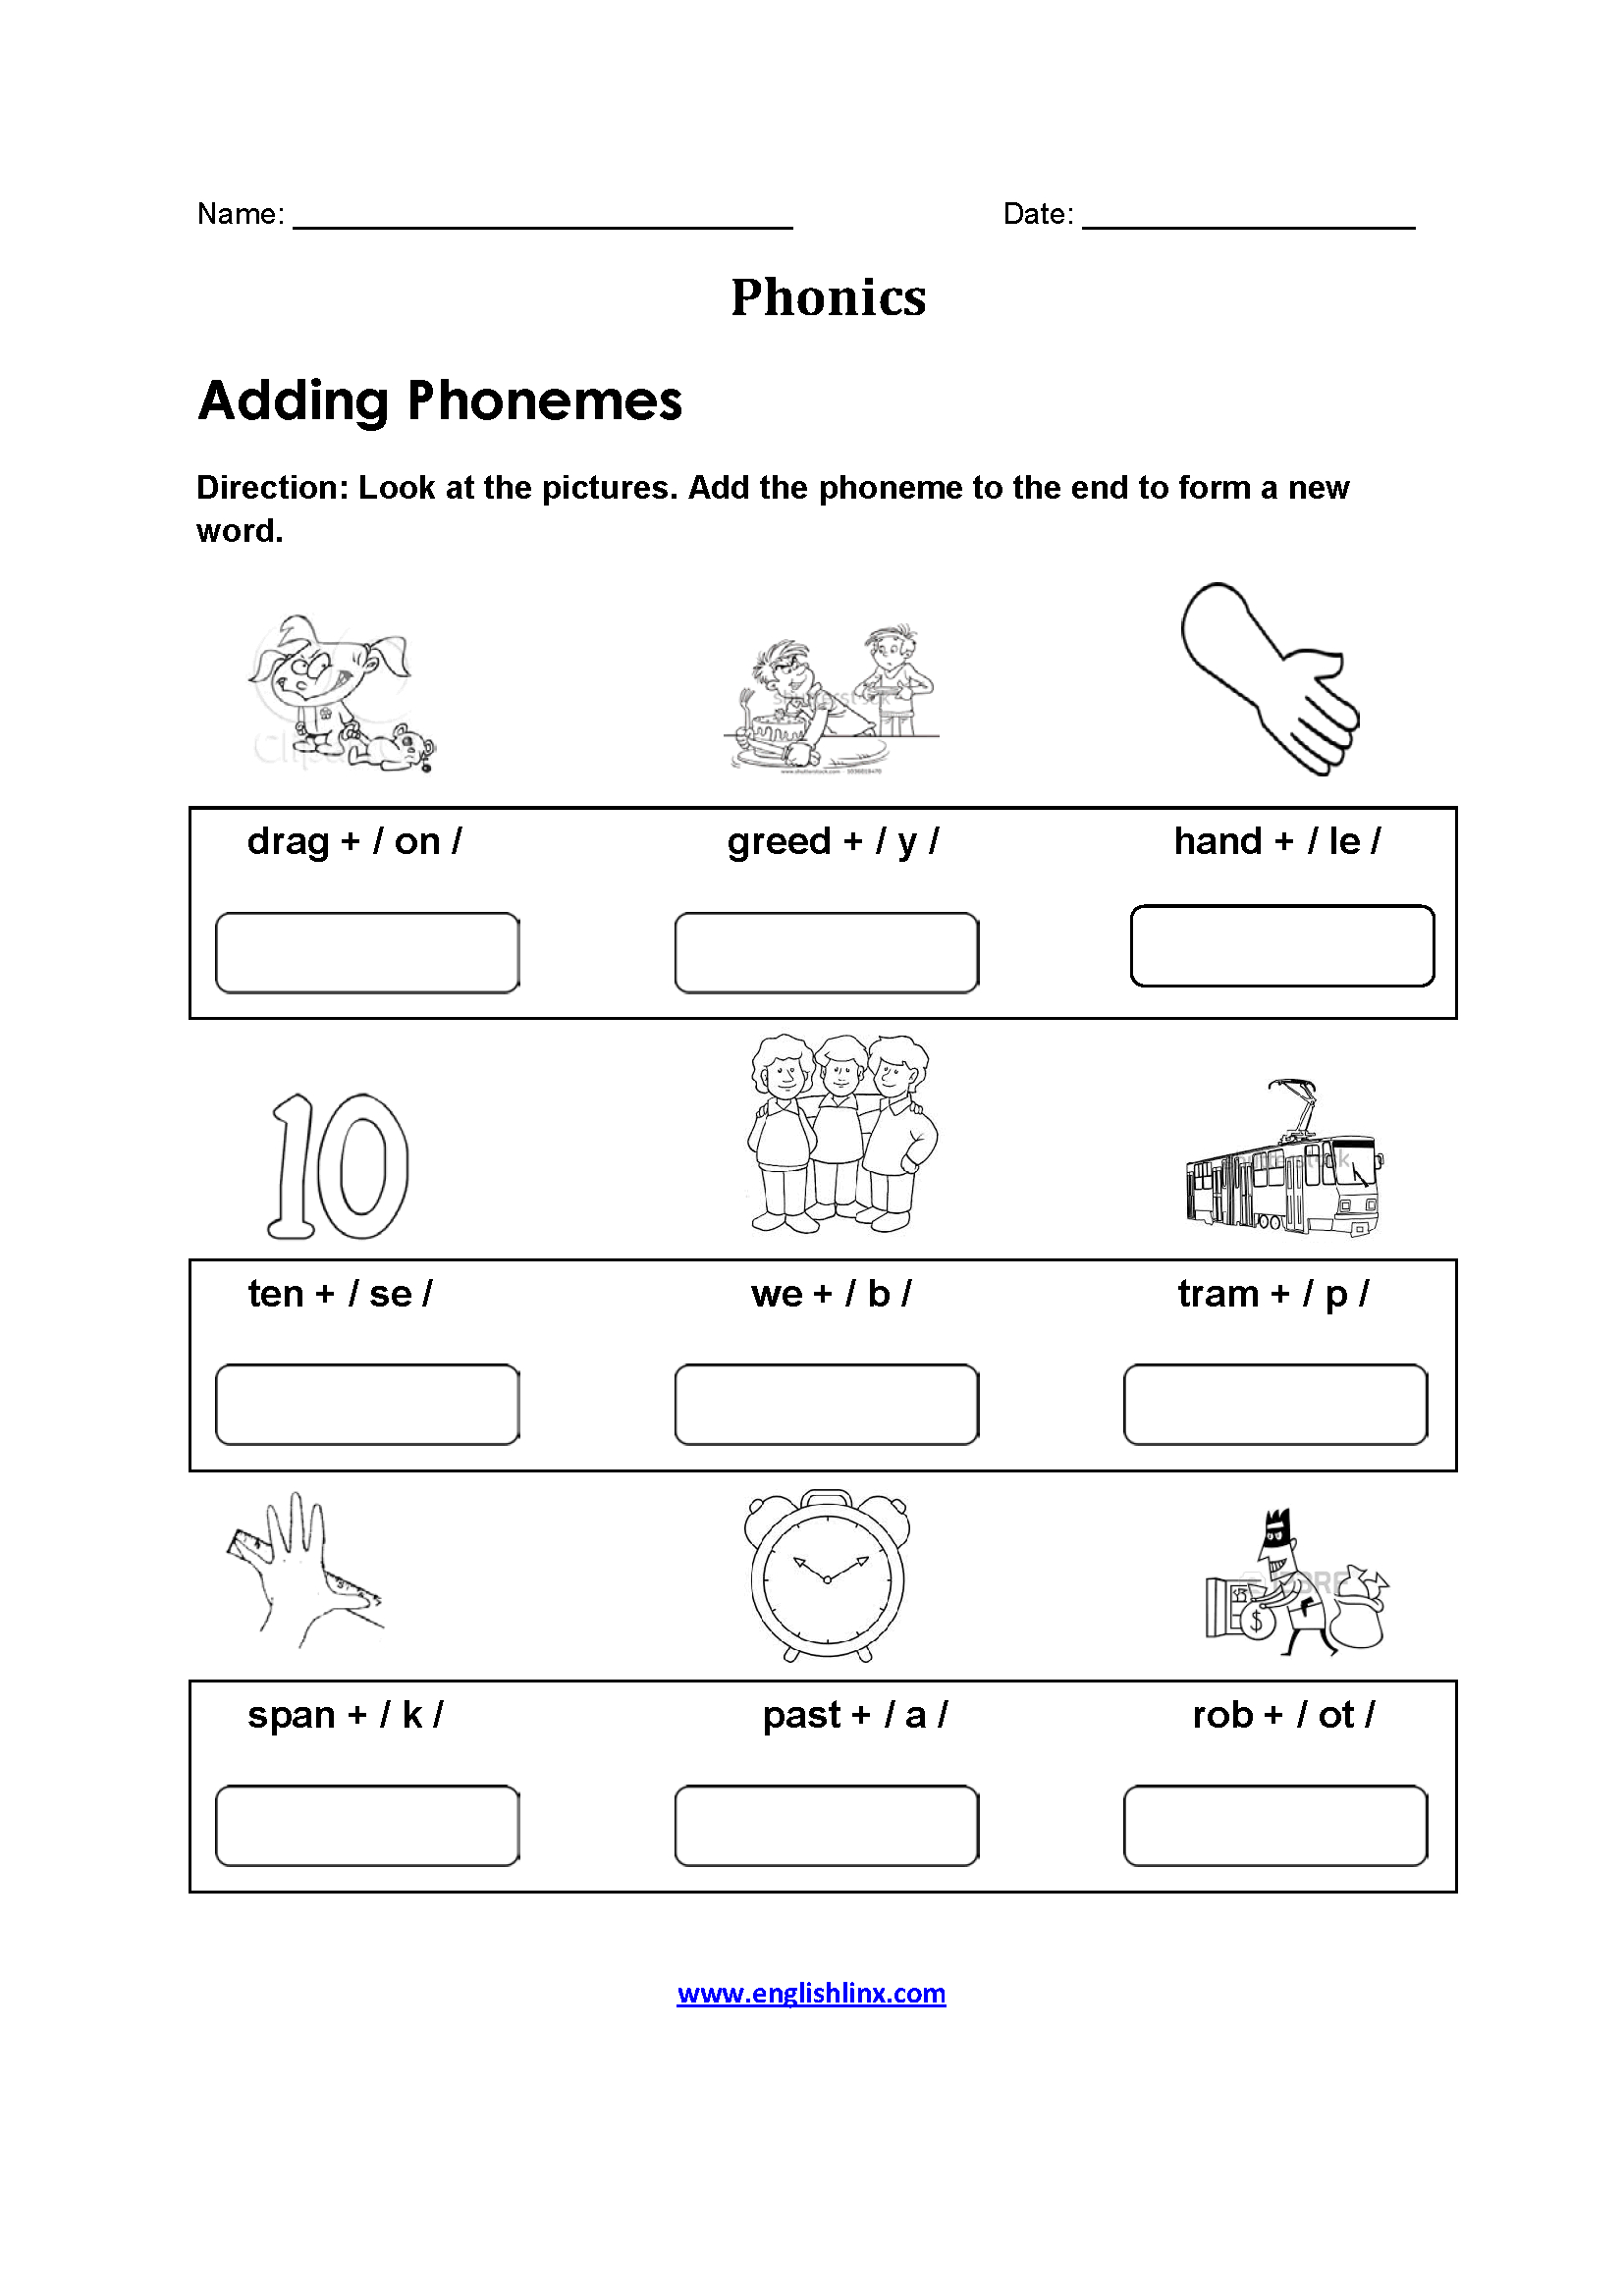 Phonics Worksheets For Adults Printable | Printable Worksheets